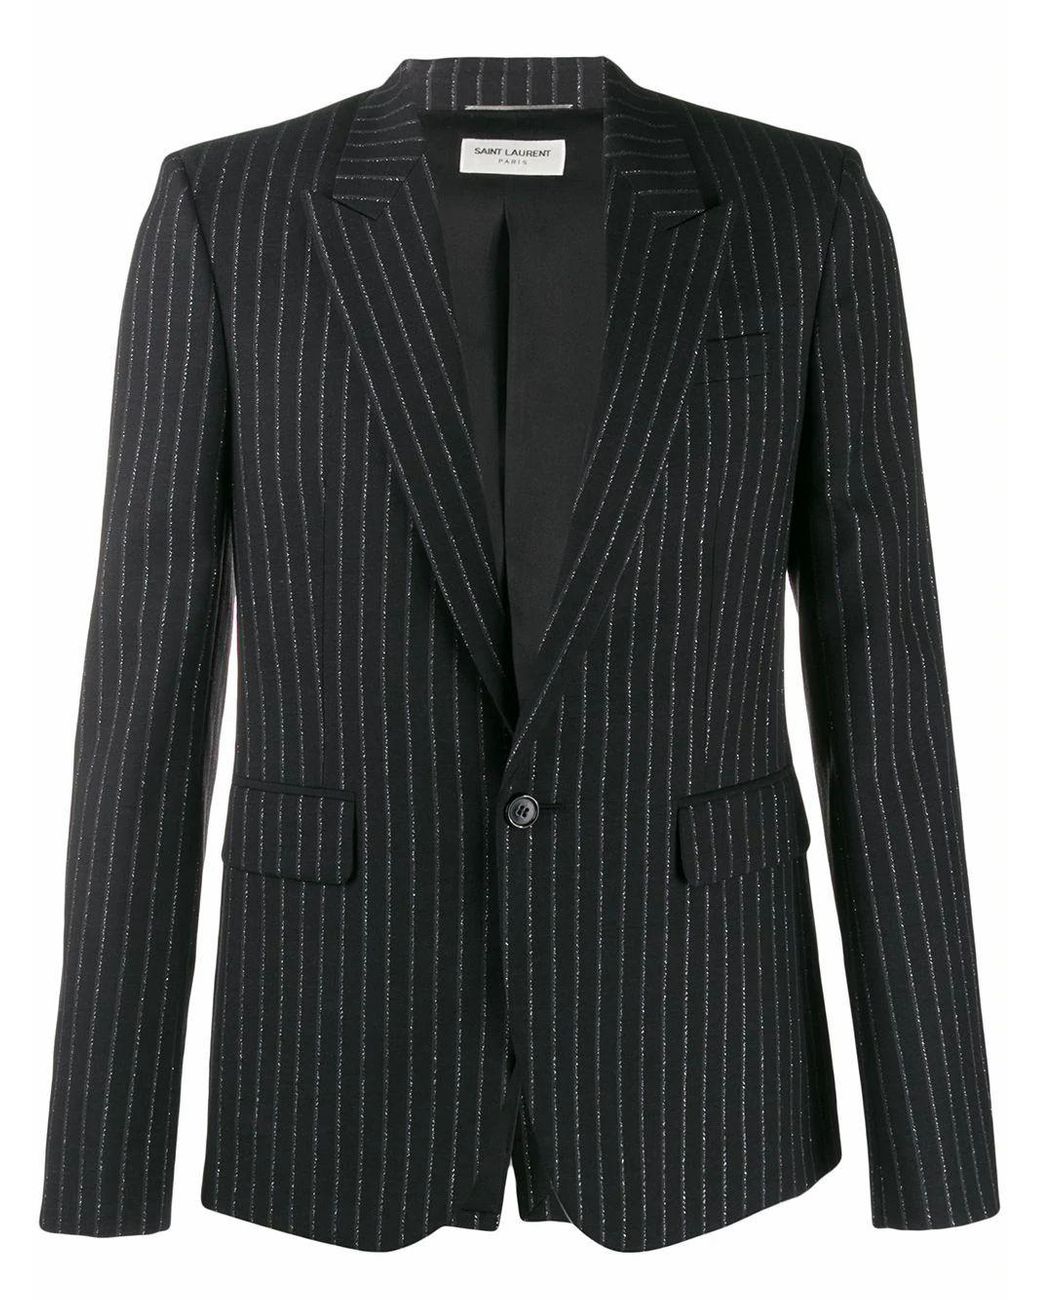 Saint Laurent Wool Blazer in Black for Men - Lyst